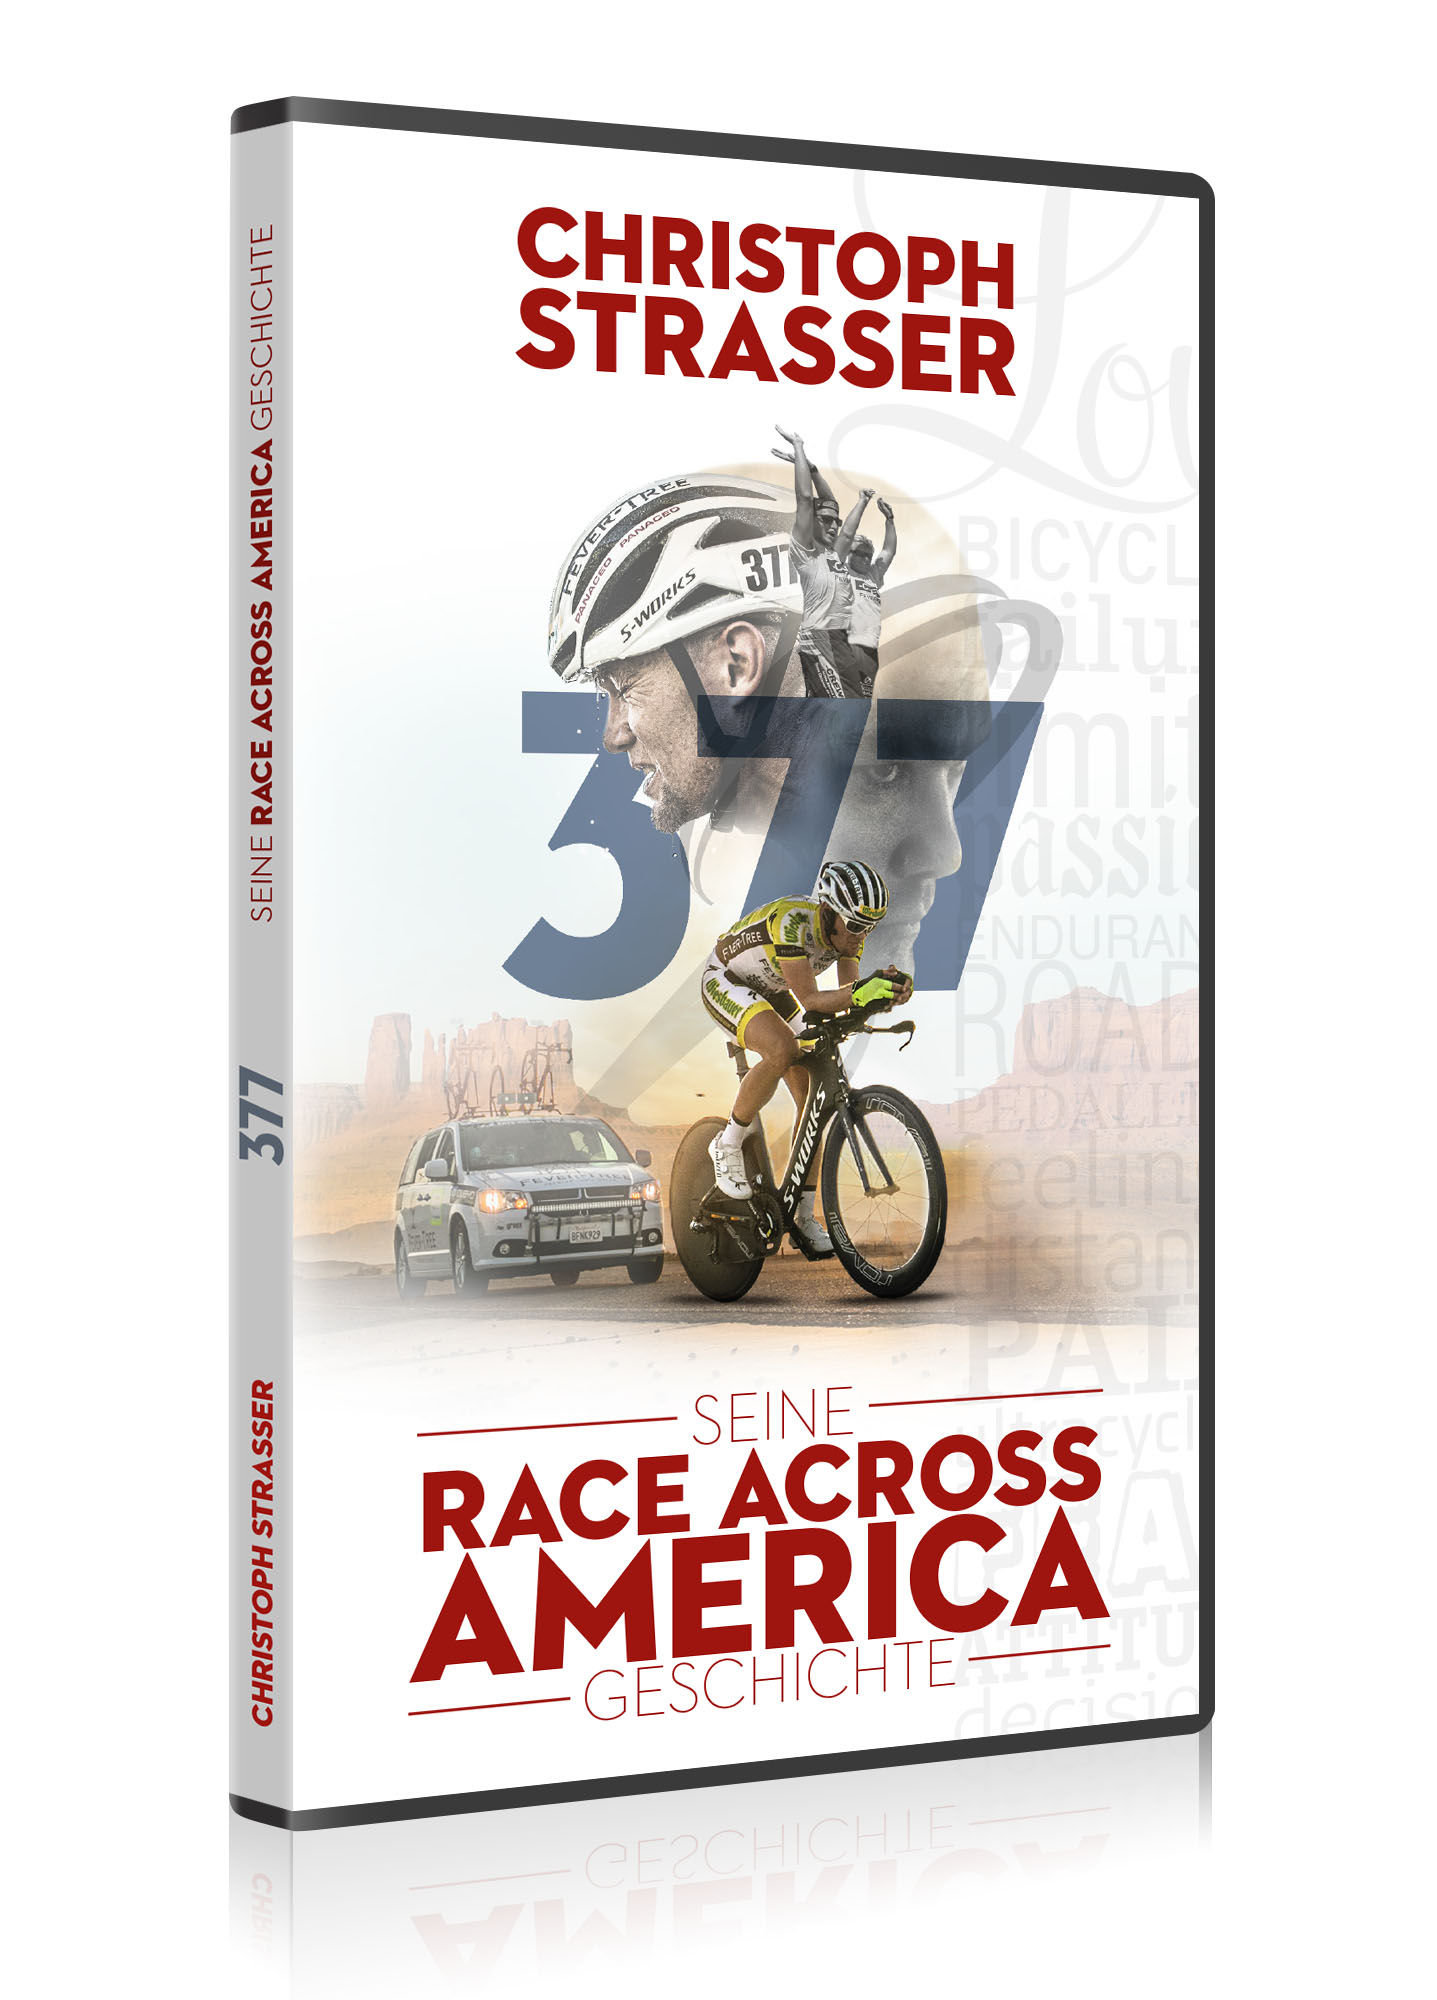 DVD "Christoph Strasser - 377 - Seine Race Across America Geschichte"